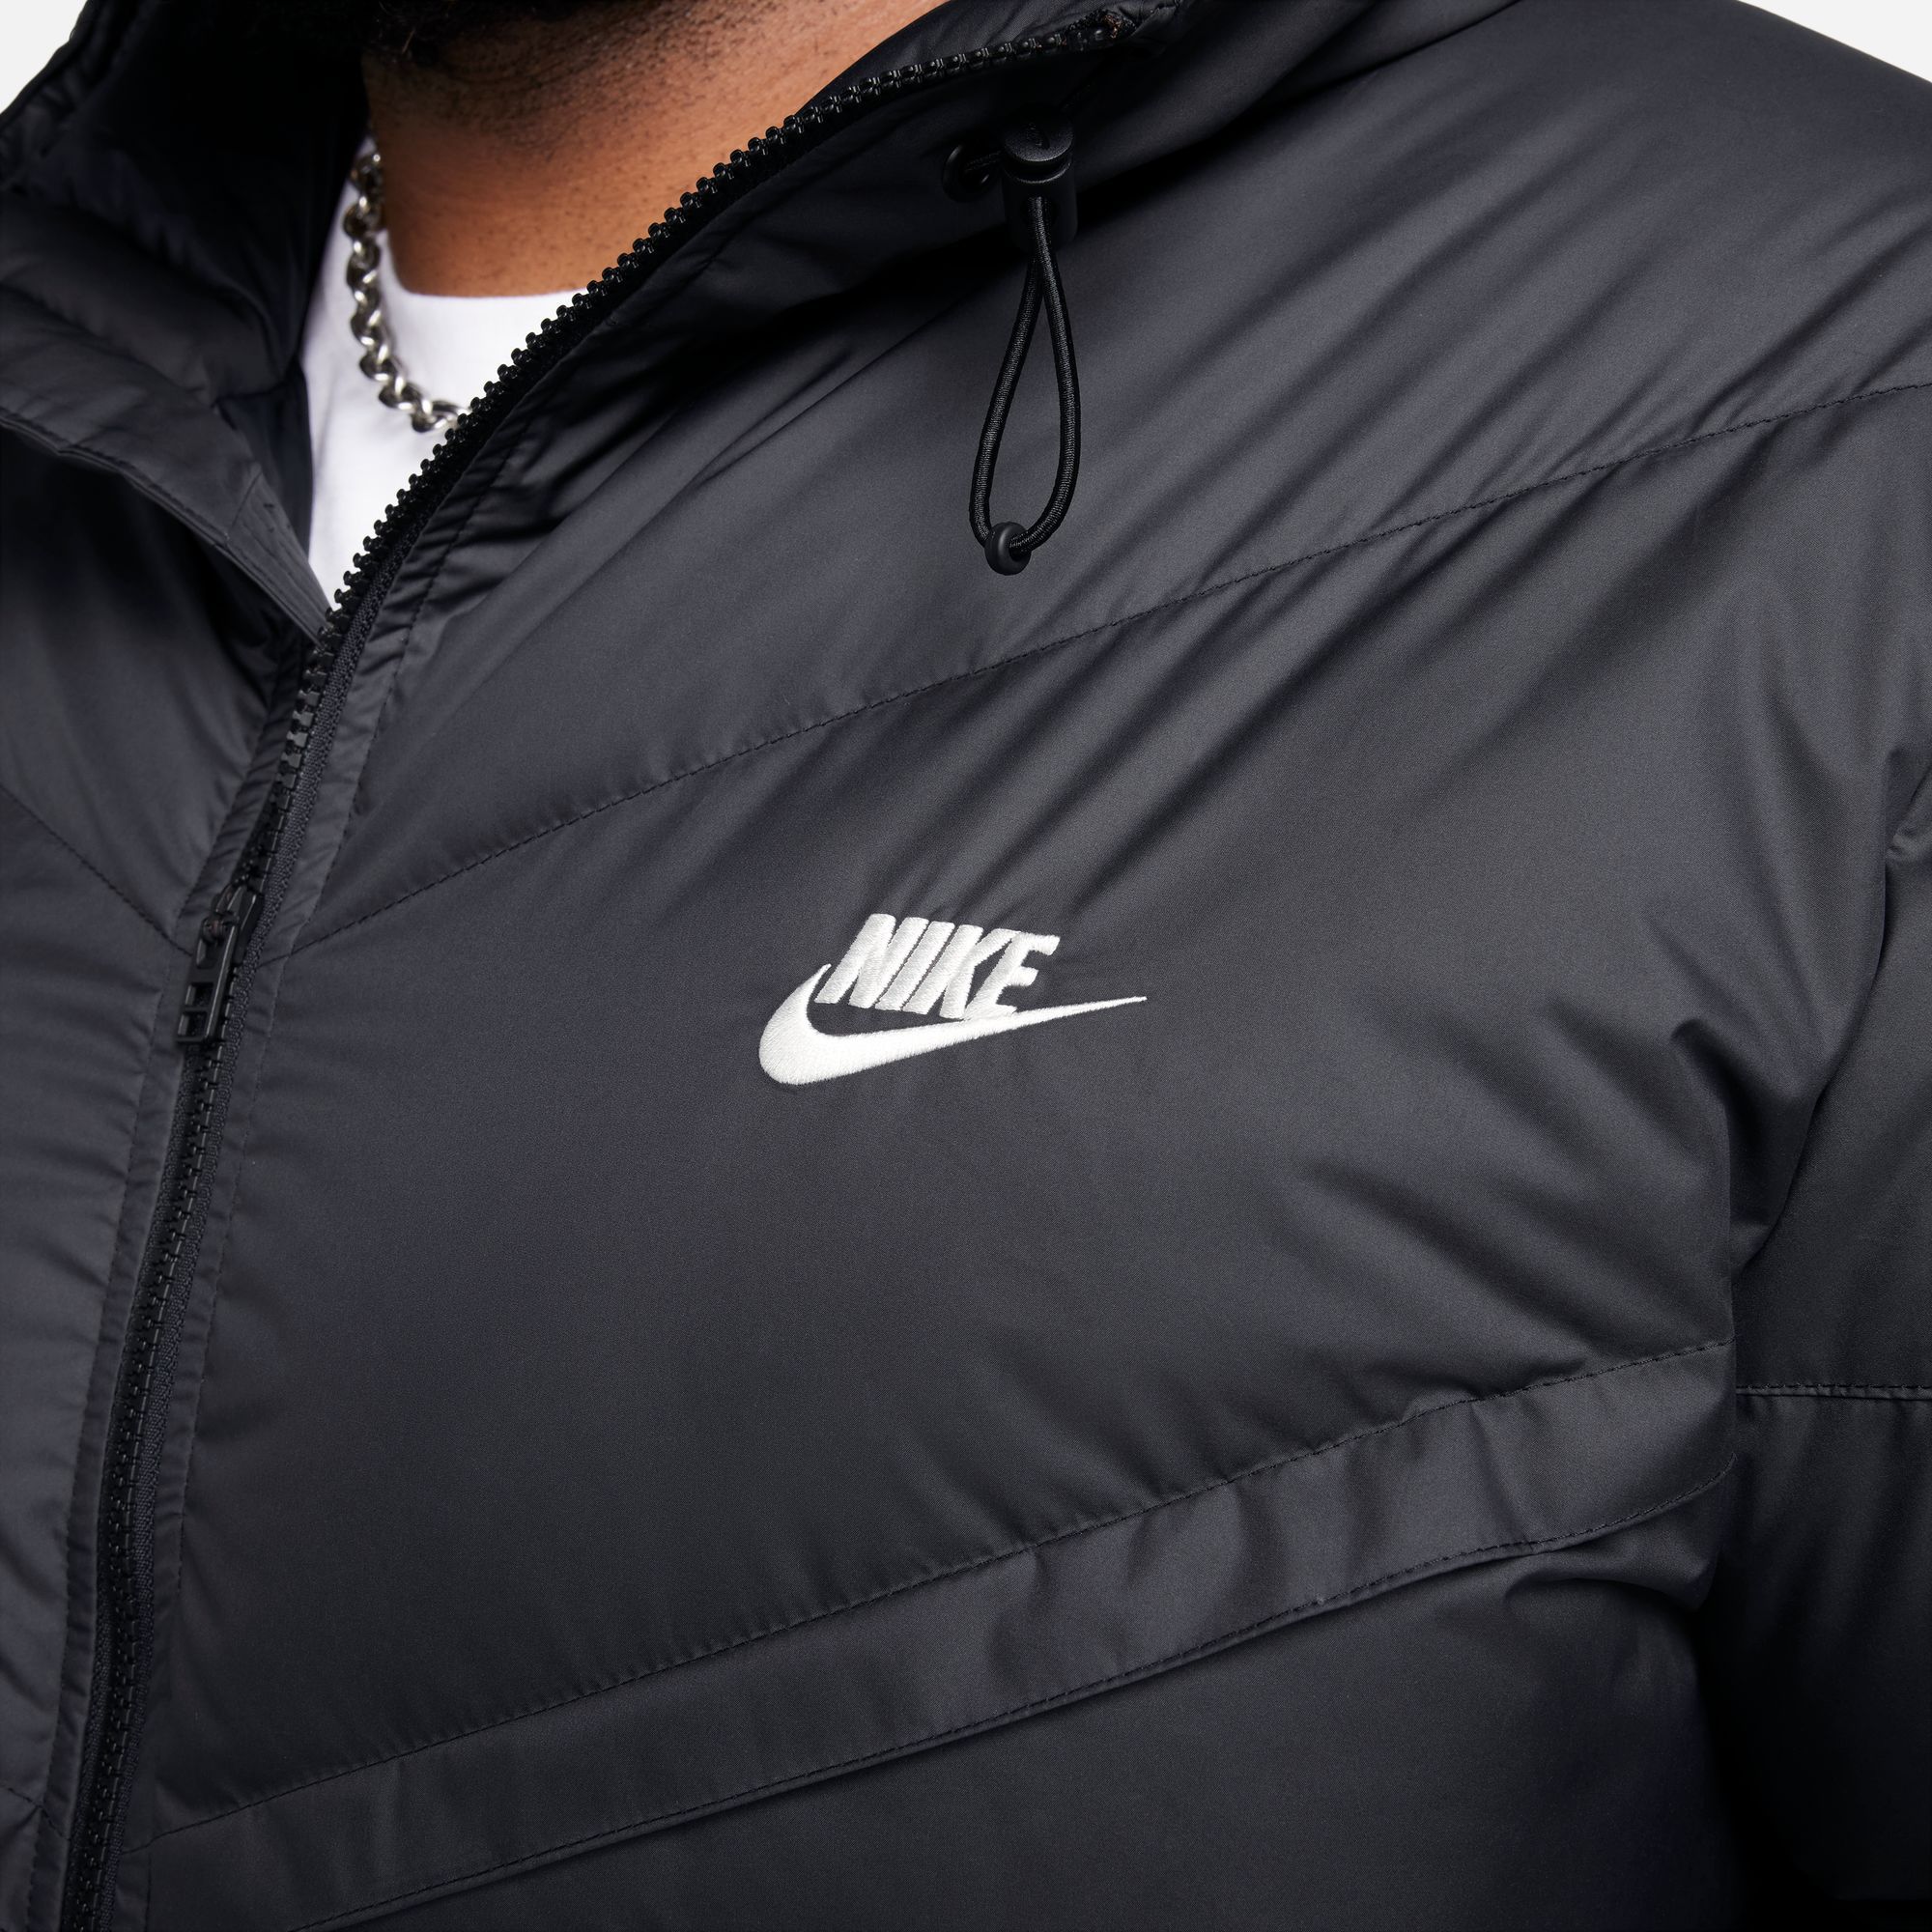 Nike Men's Storm-FIT Windrunner PrimaLoft Hooded Puffer Jacket